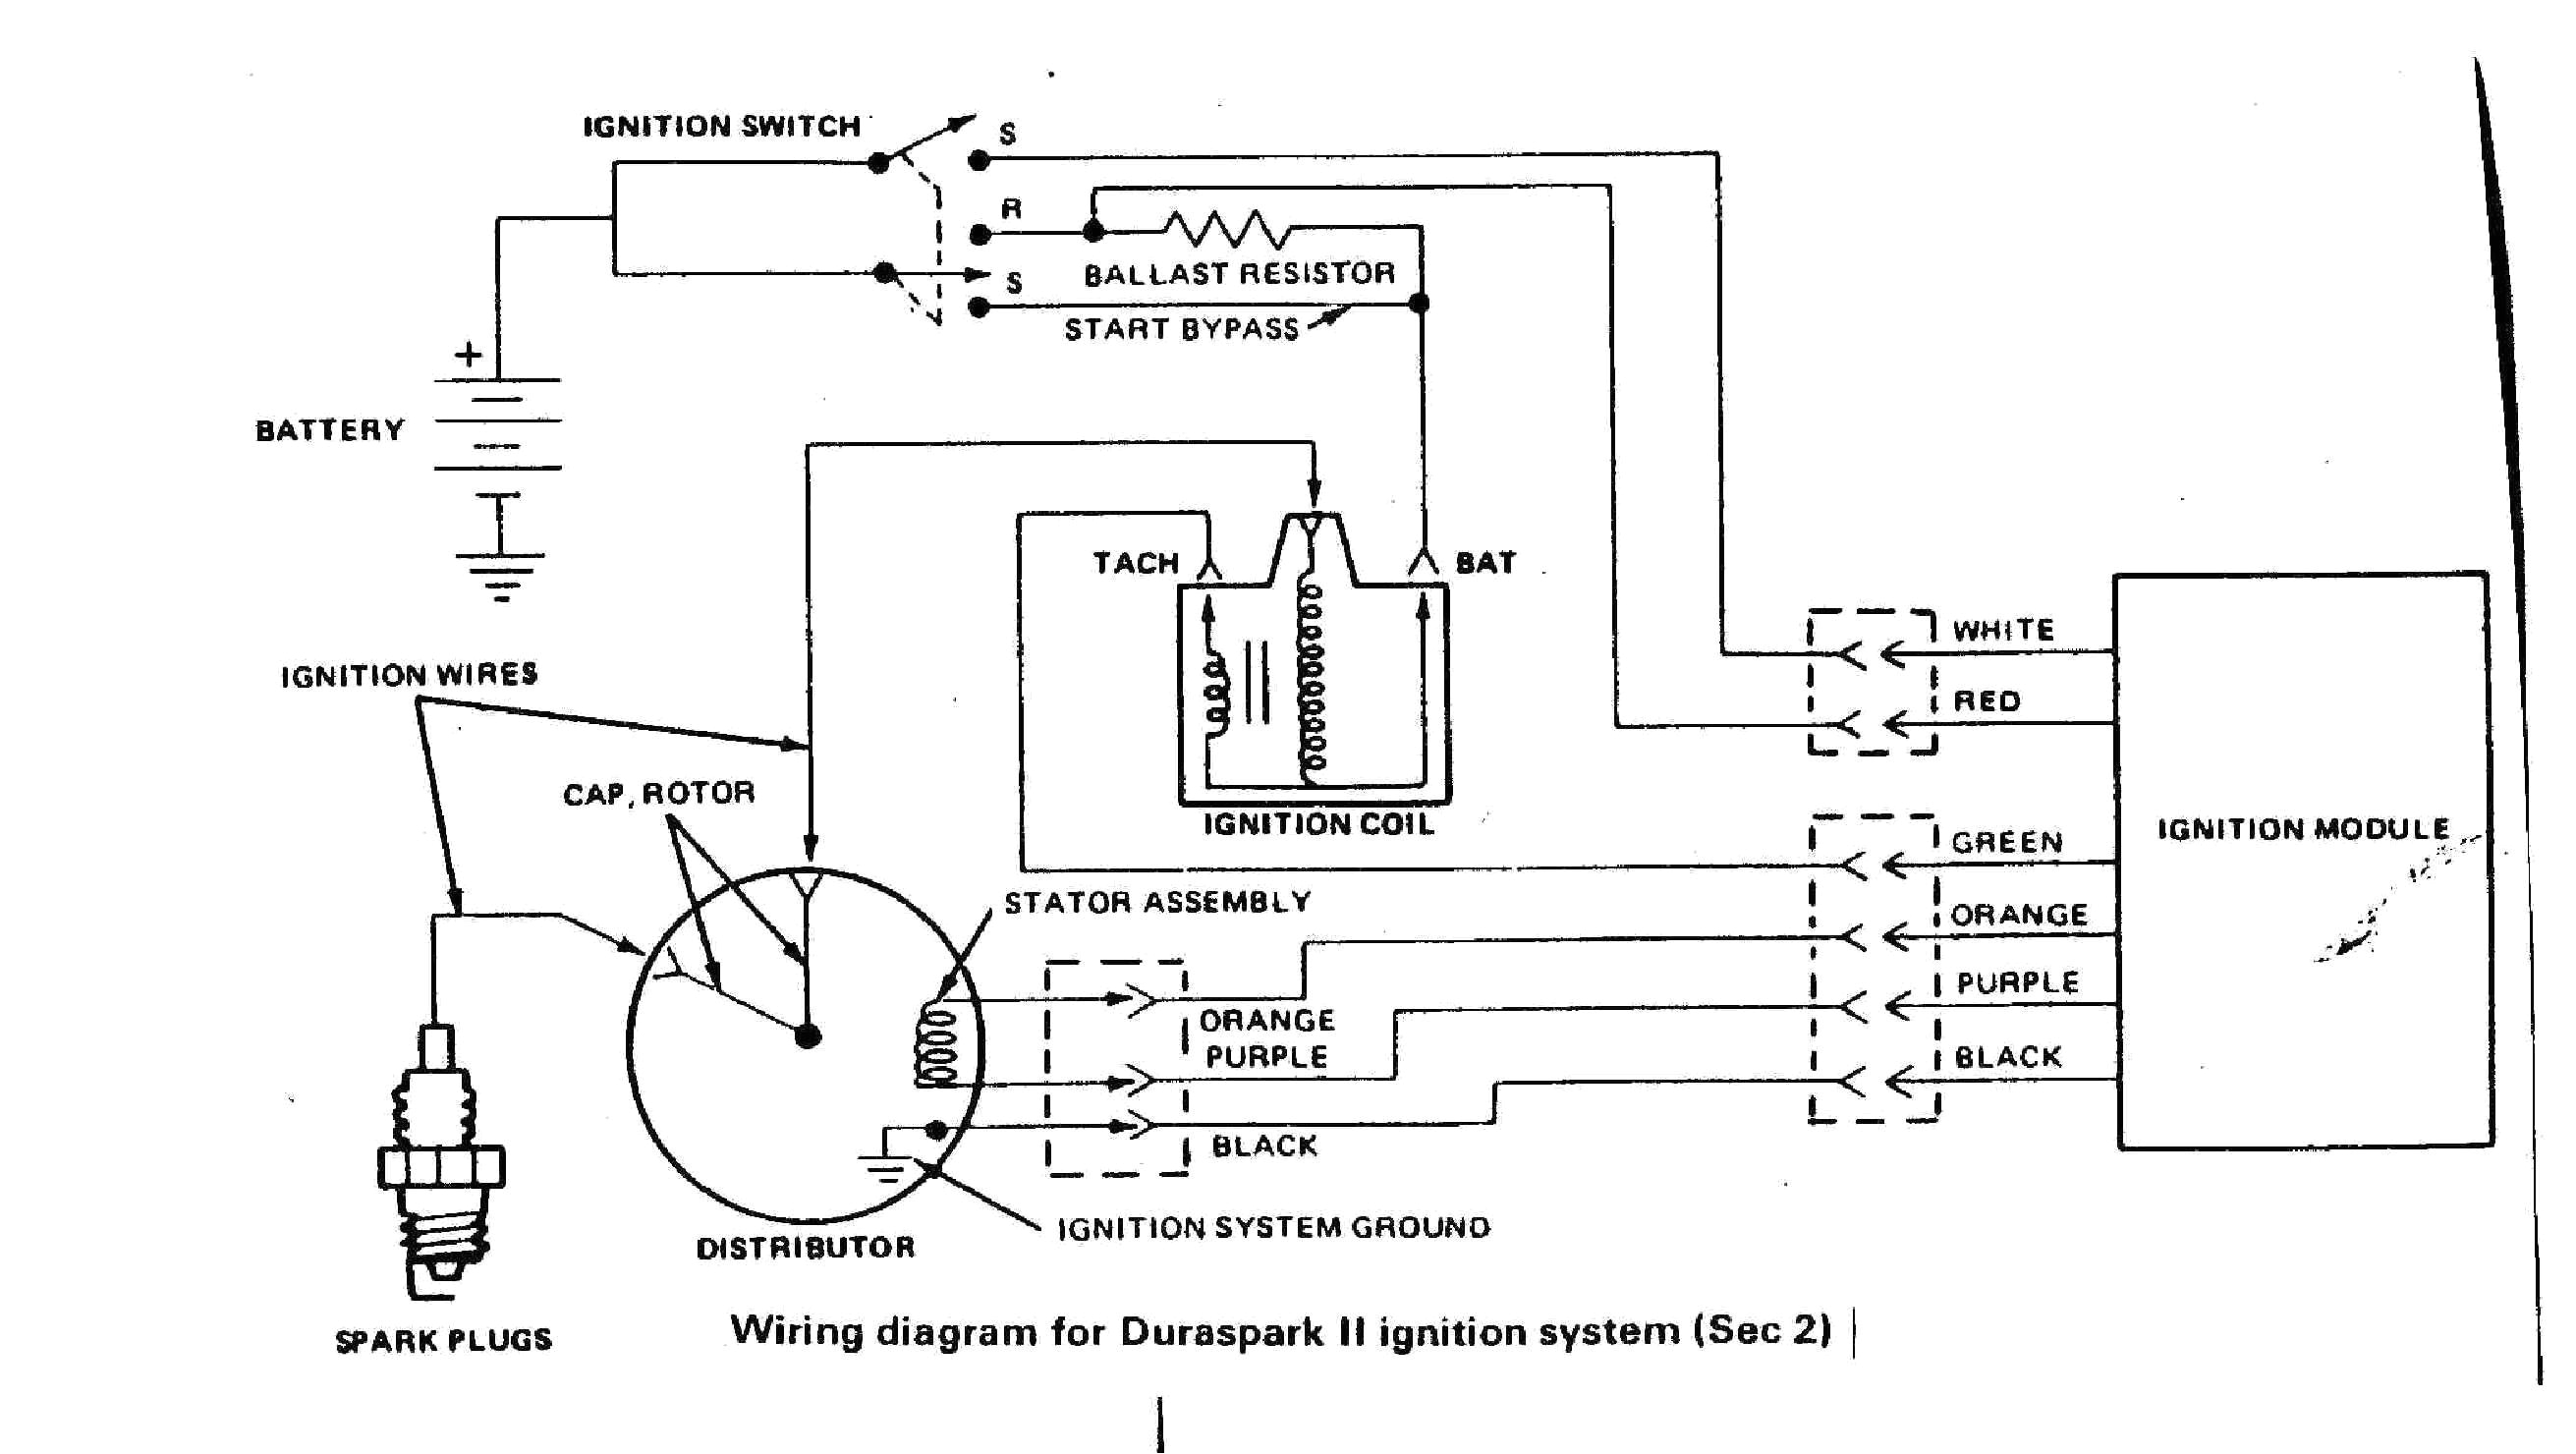 sw magneto diagram data schematic diagram 9118 converter wiring diagram magneto